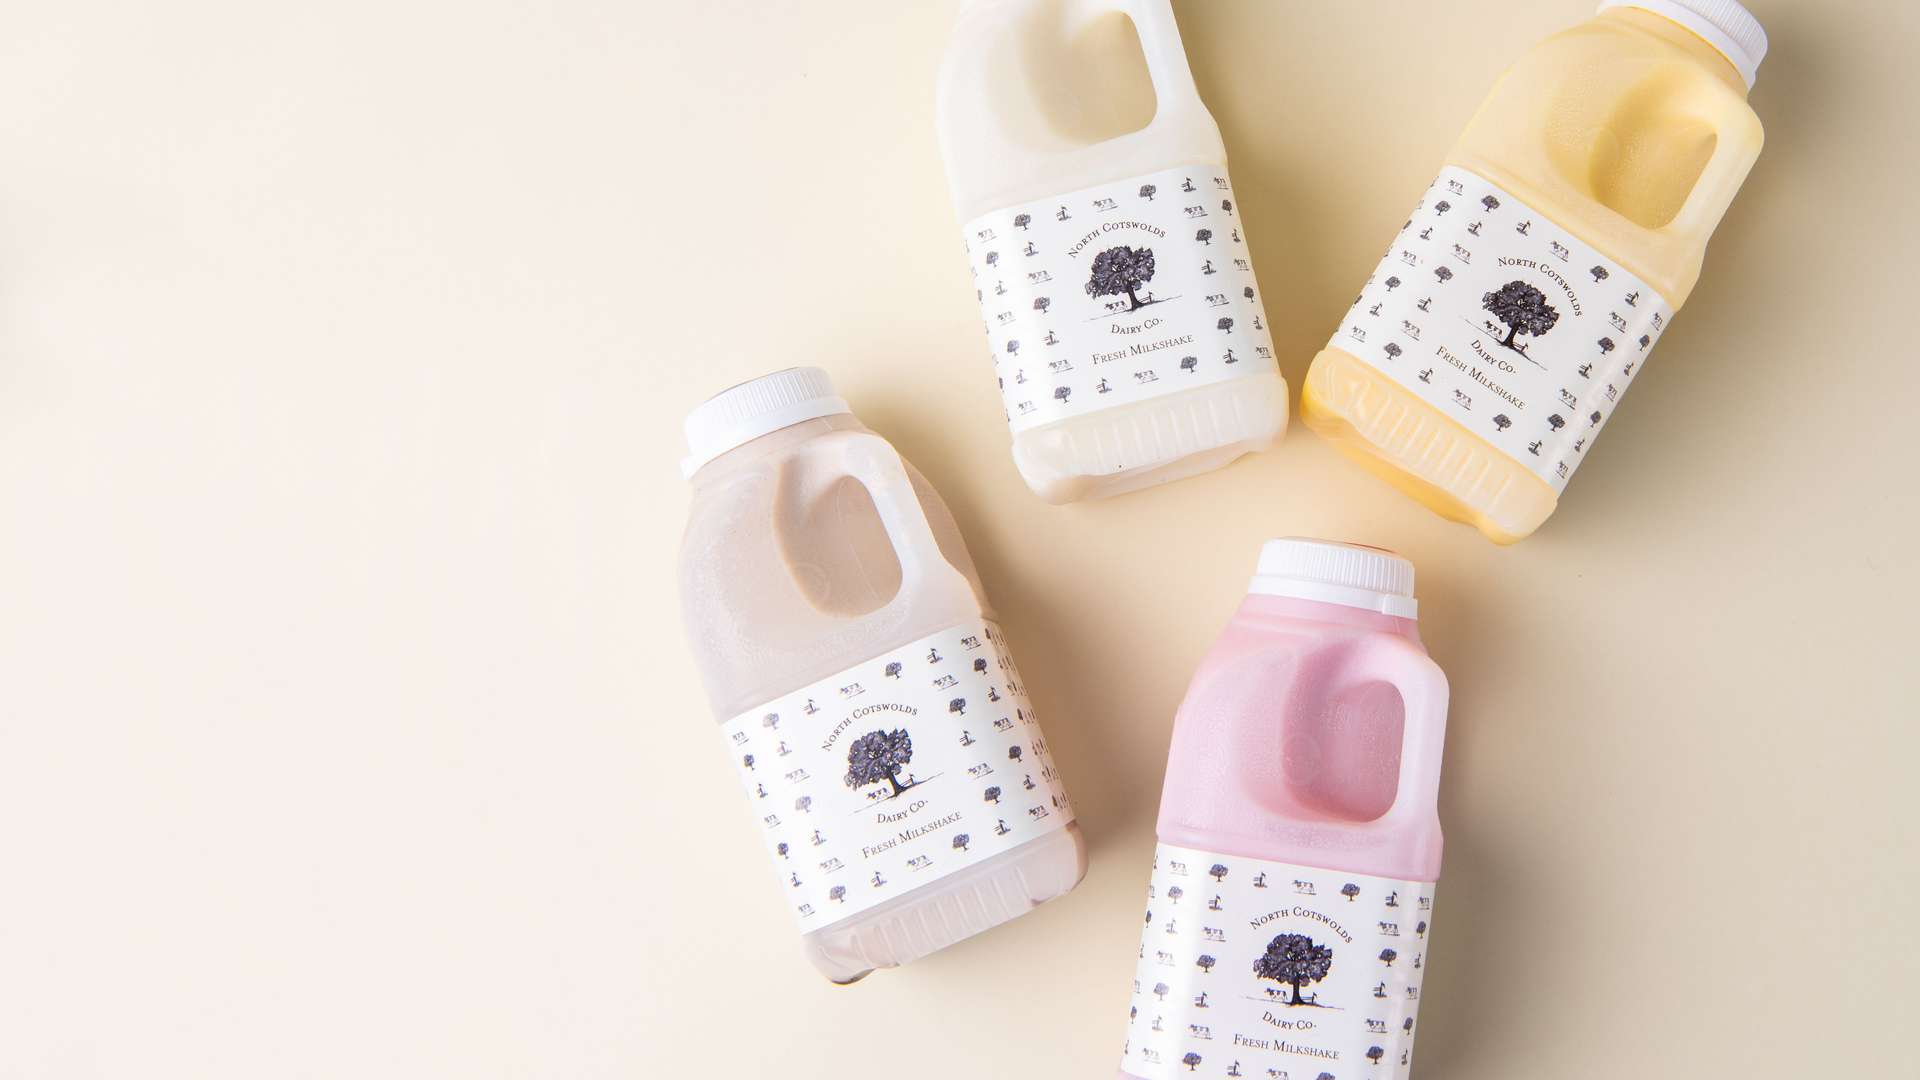 Milkshake packaging and product design